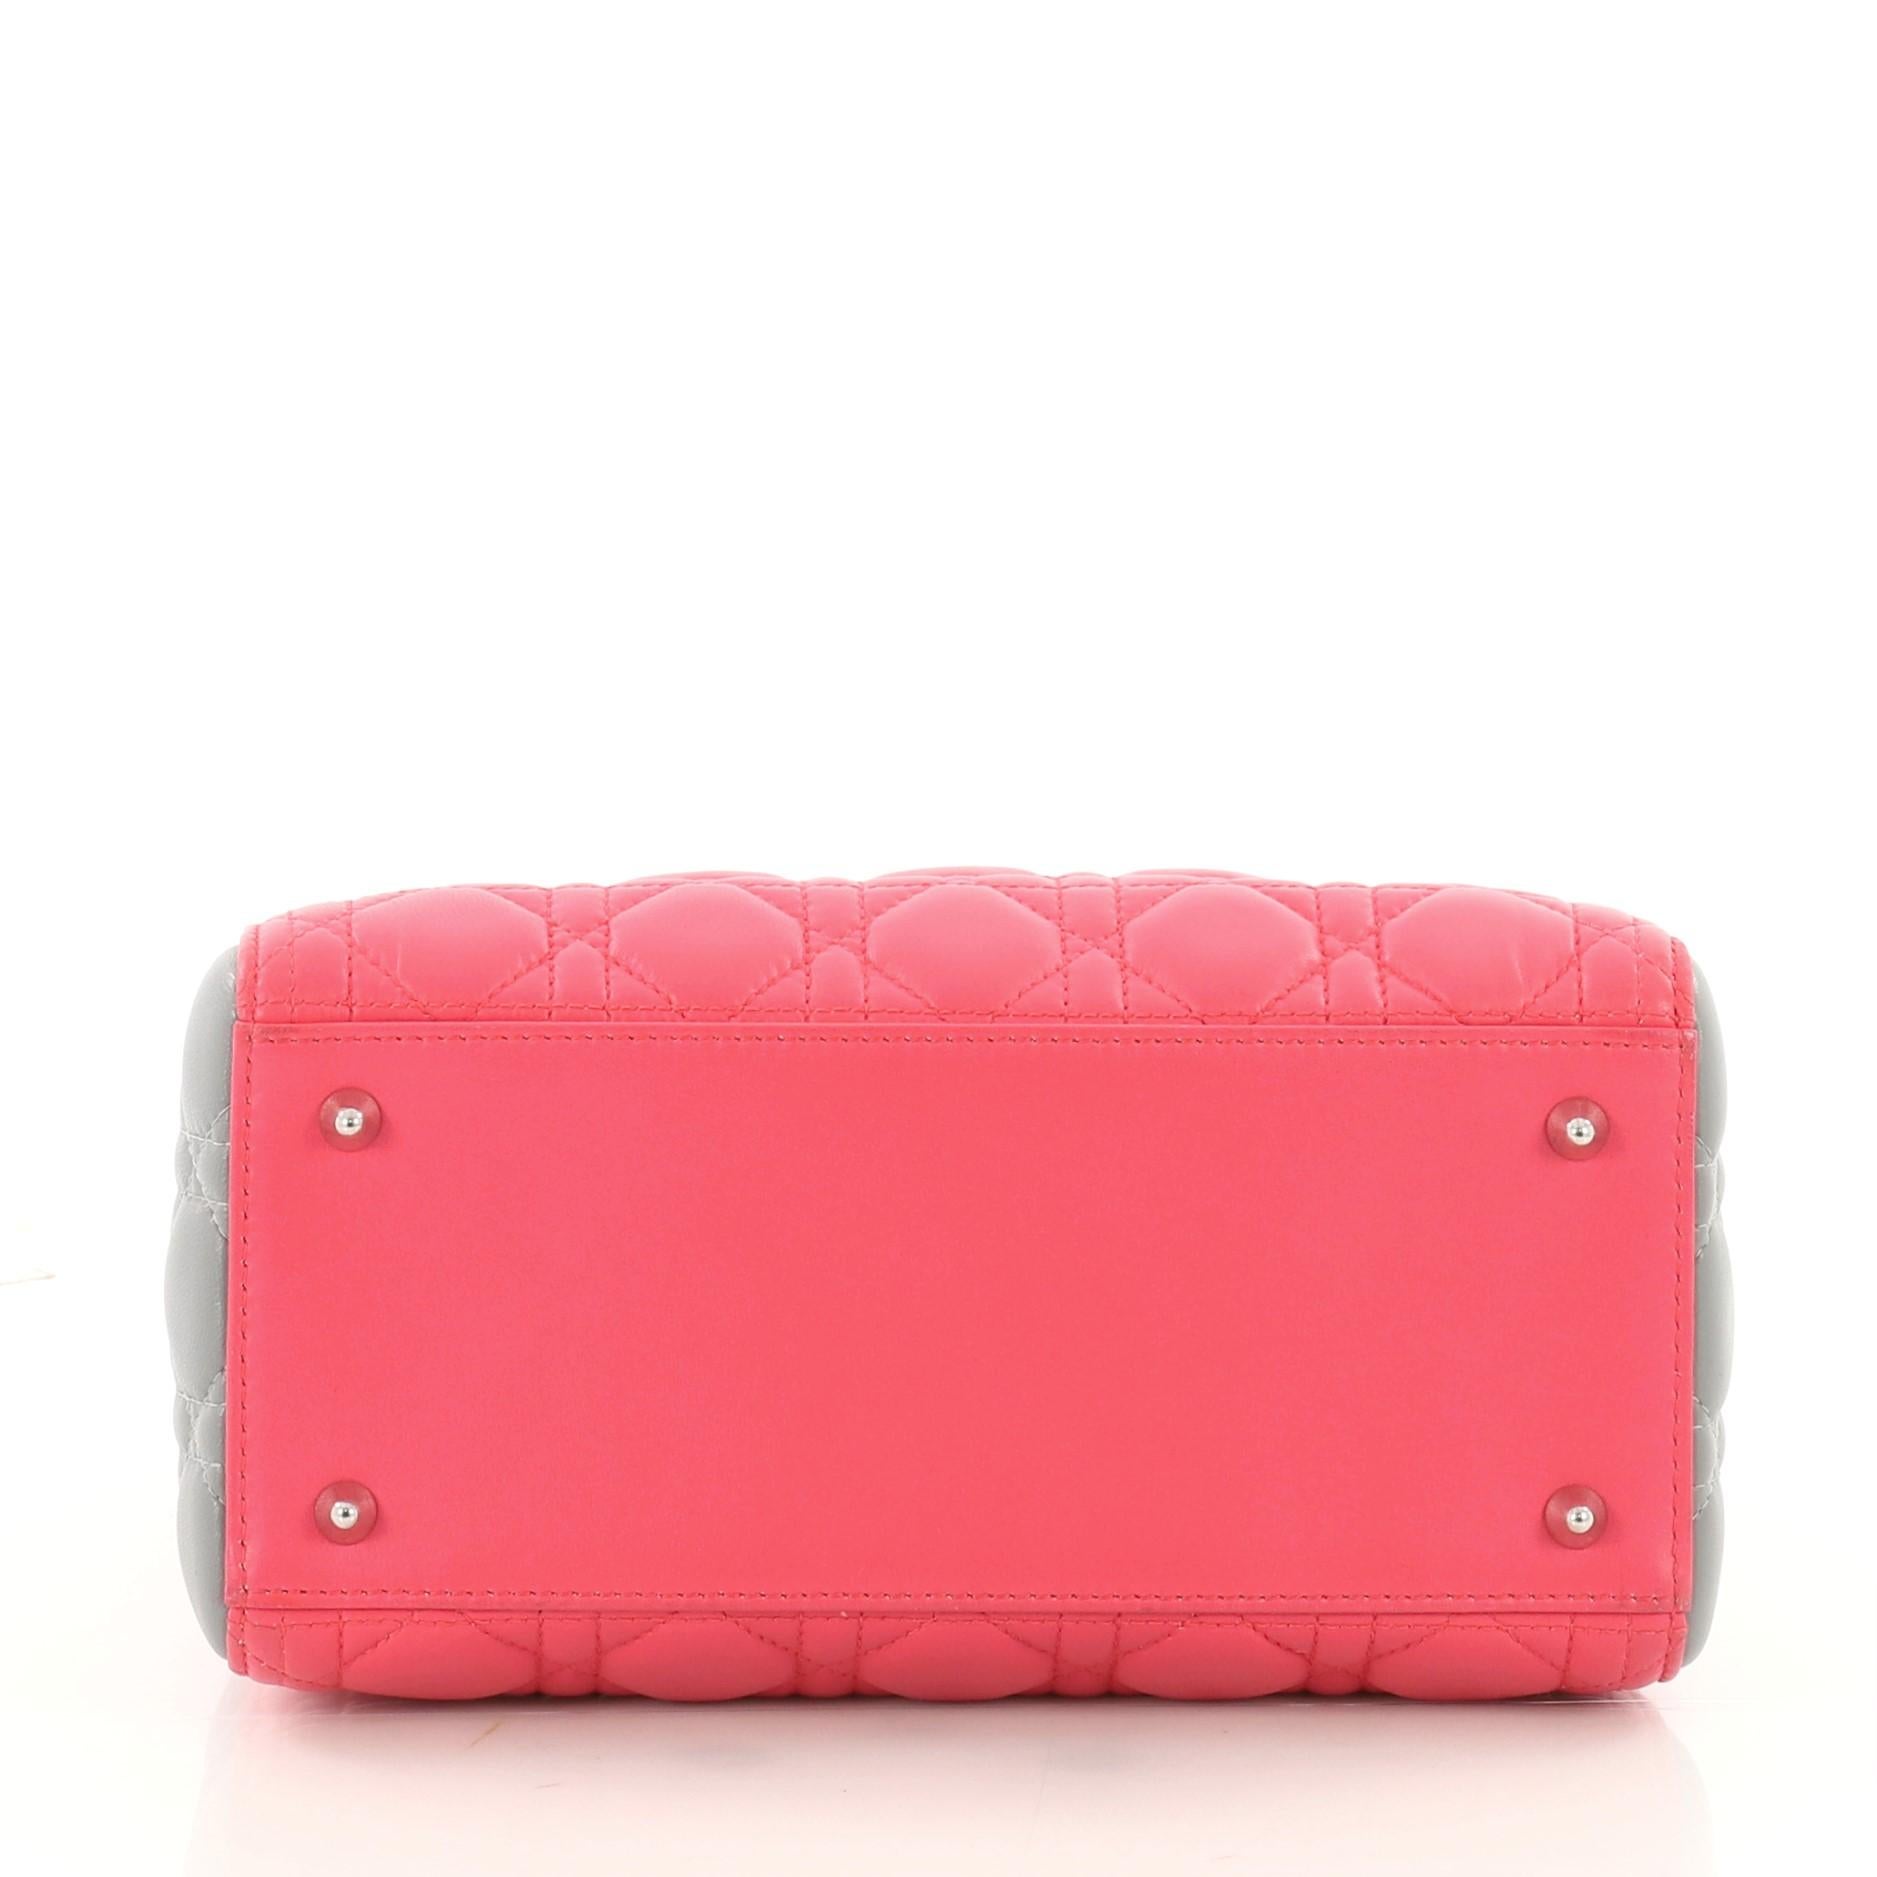 Pink Christian Dior Tricolor Lady Dior Handbag Cannage Quilt Leather Medium